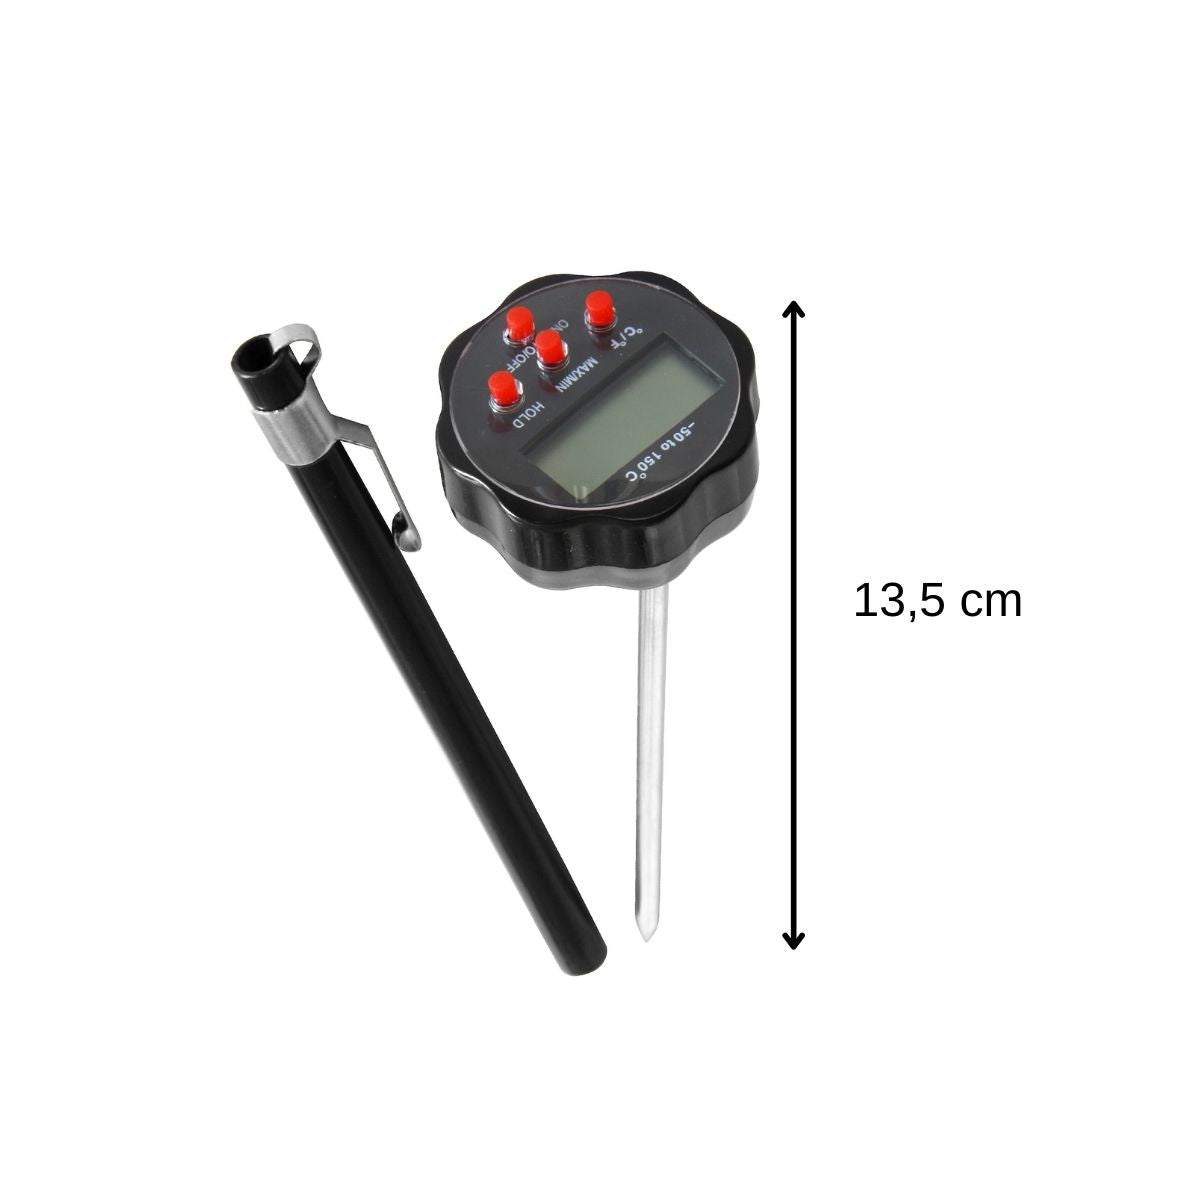 Thermomètre de cuisson digital Fackelmann